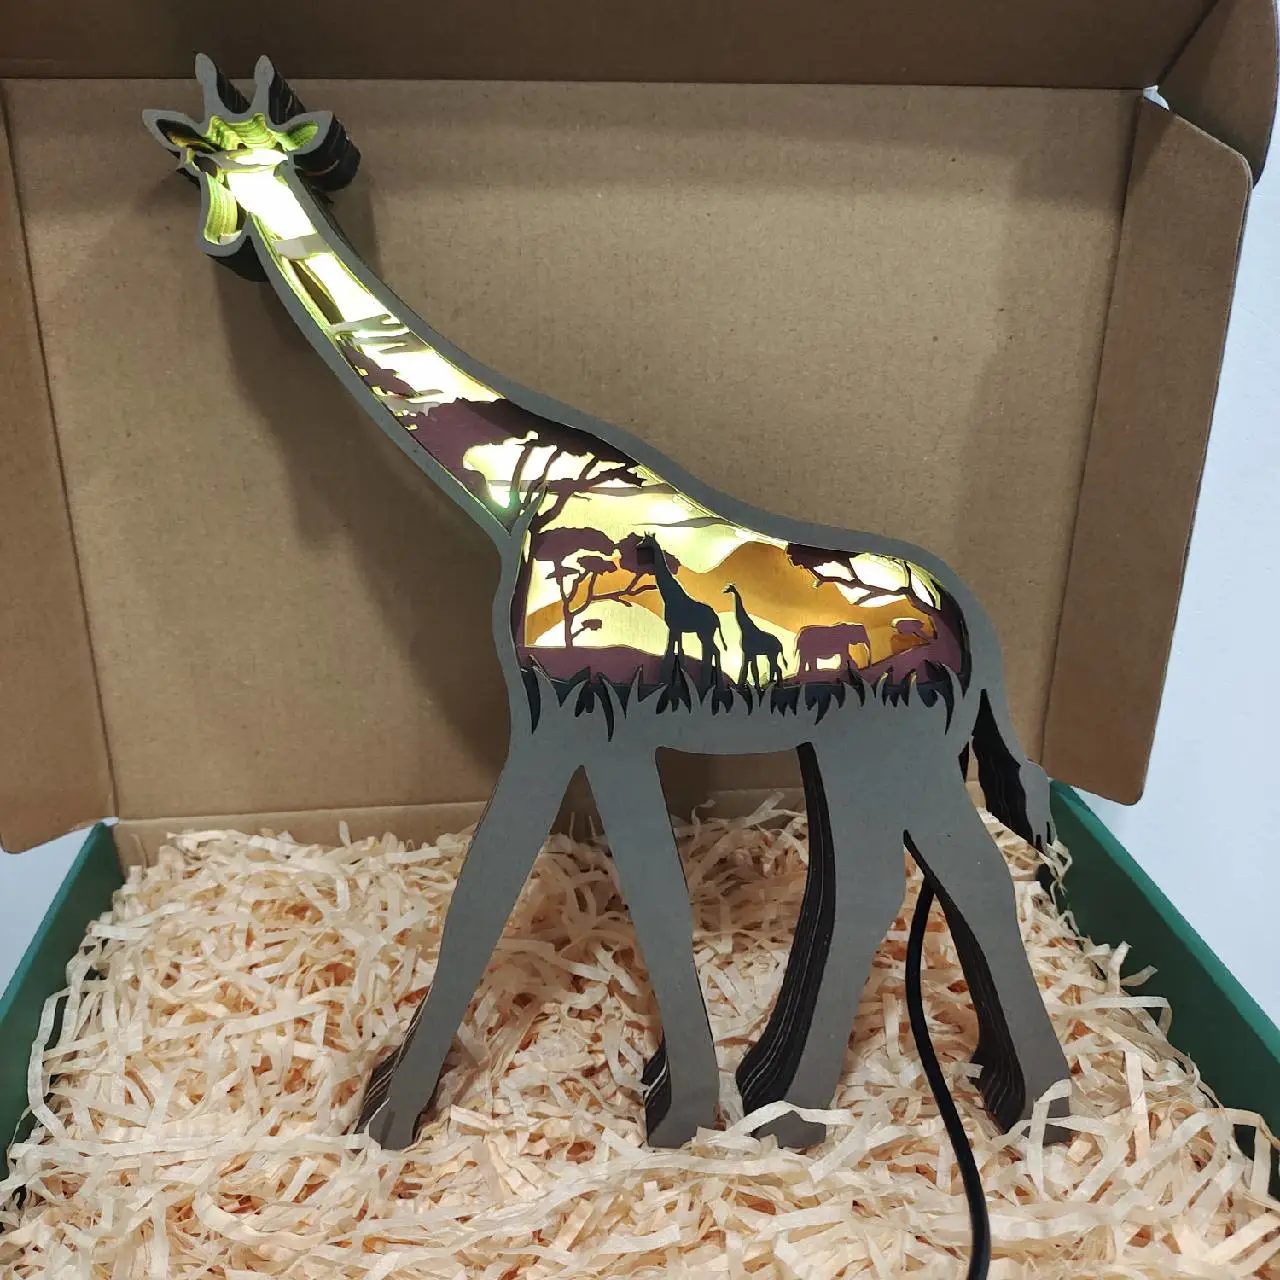 Giraffe Wooden Carving Light, Suitable For Bedroom, Bedside, Desk, Exquisite Night Light